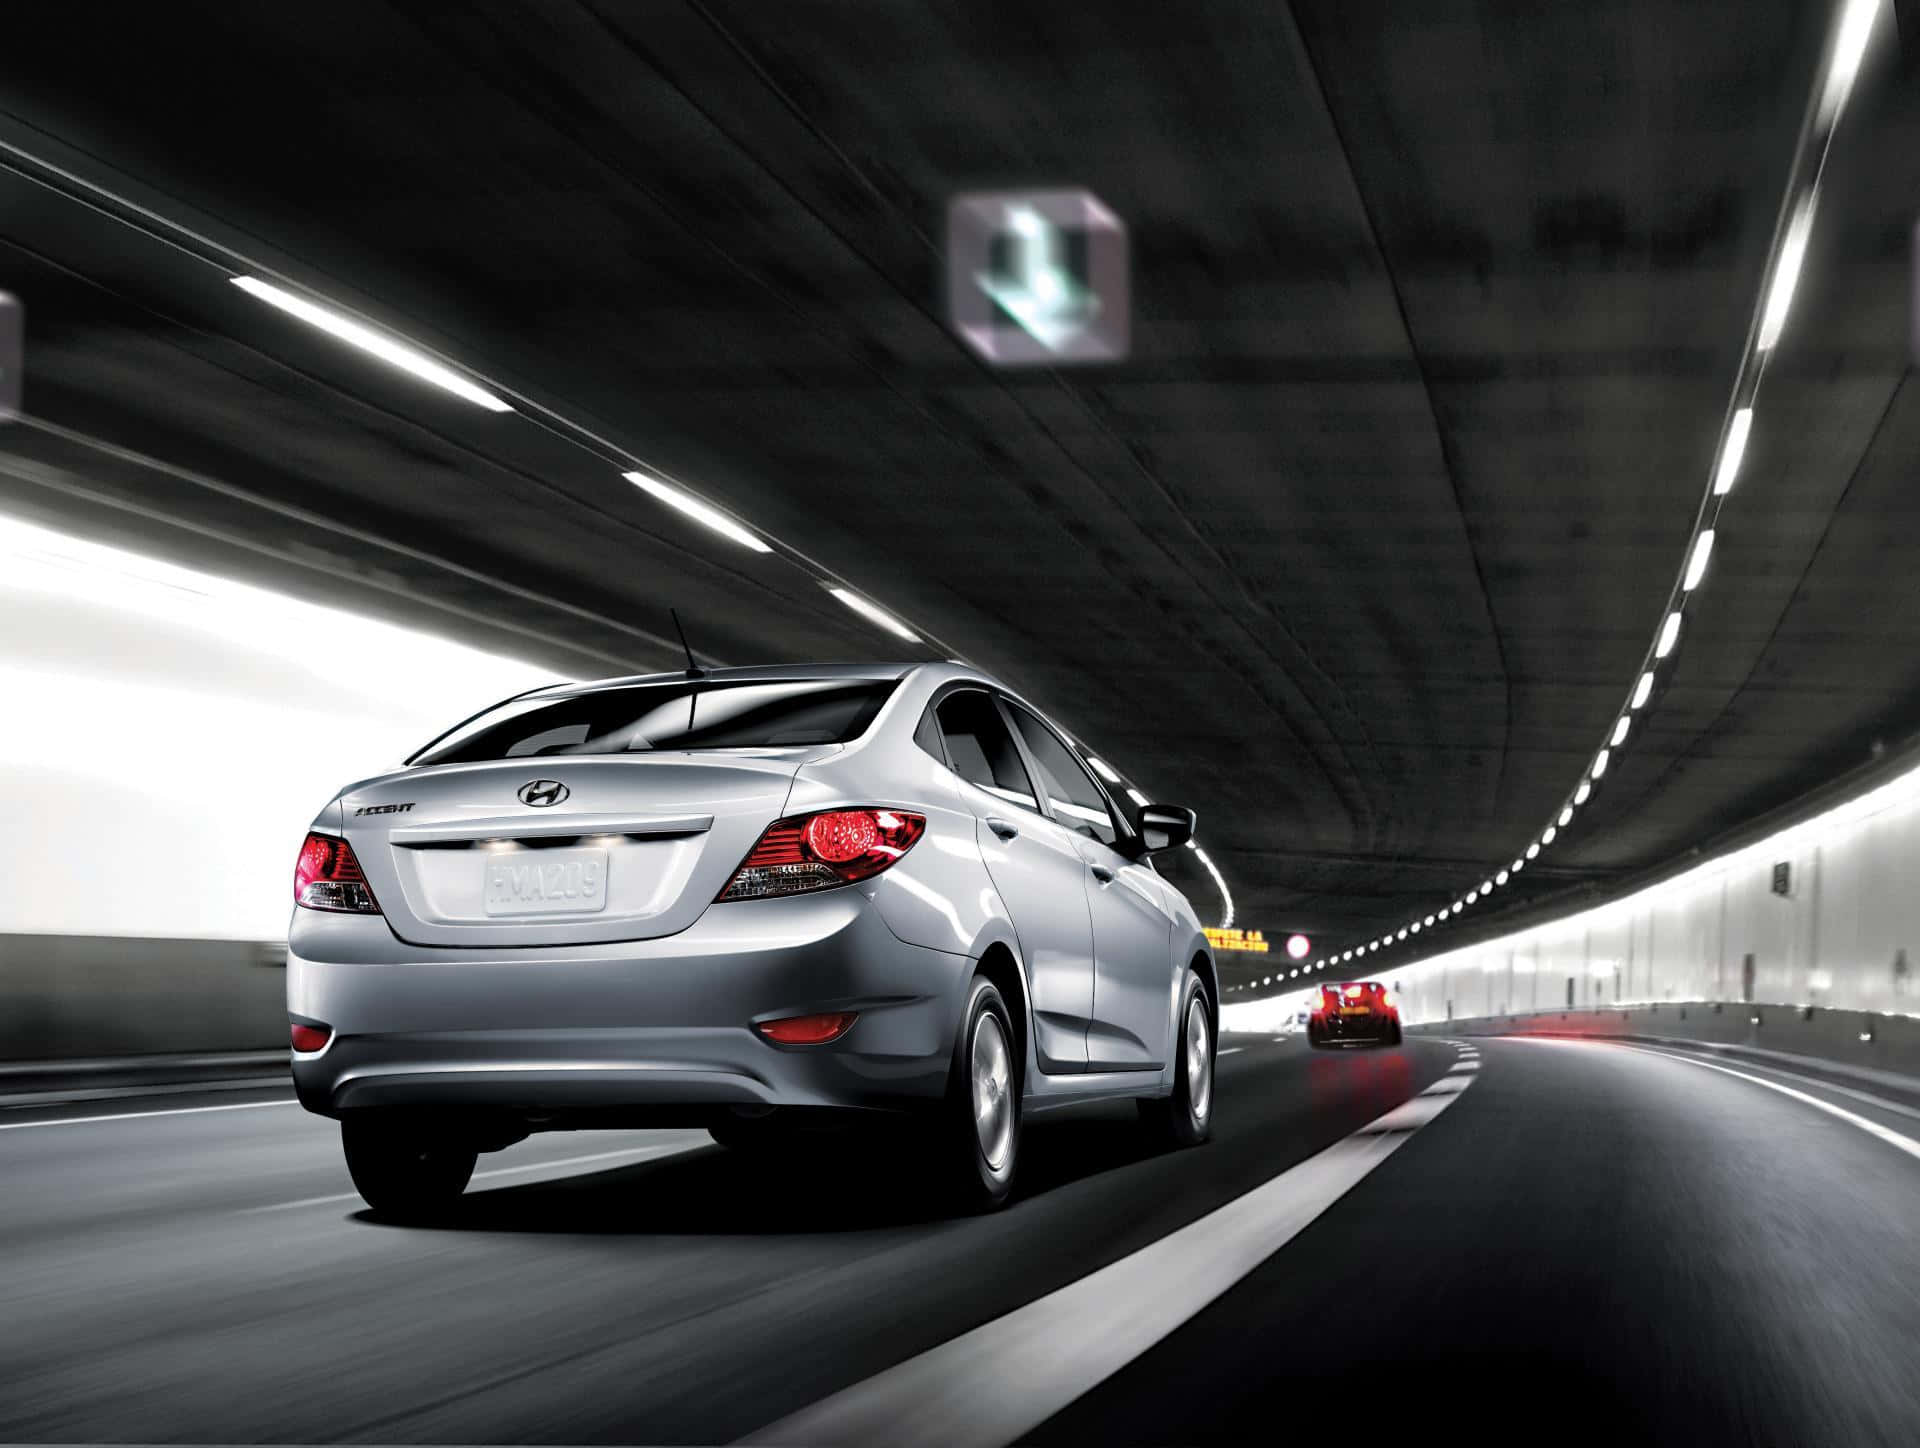 Sleek Hyundai Accent on the Road Wallpaper